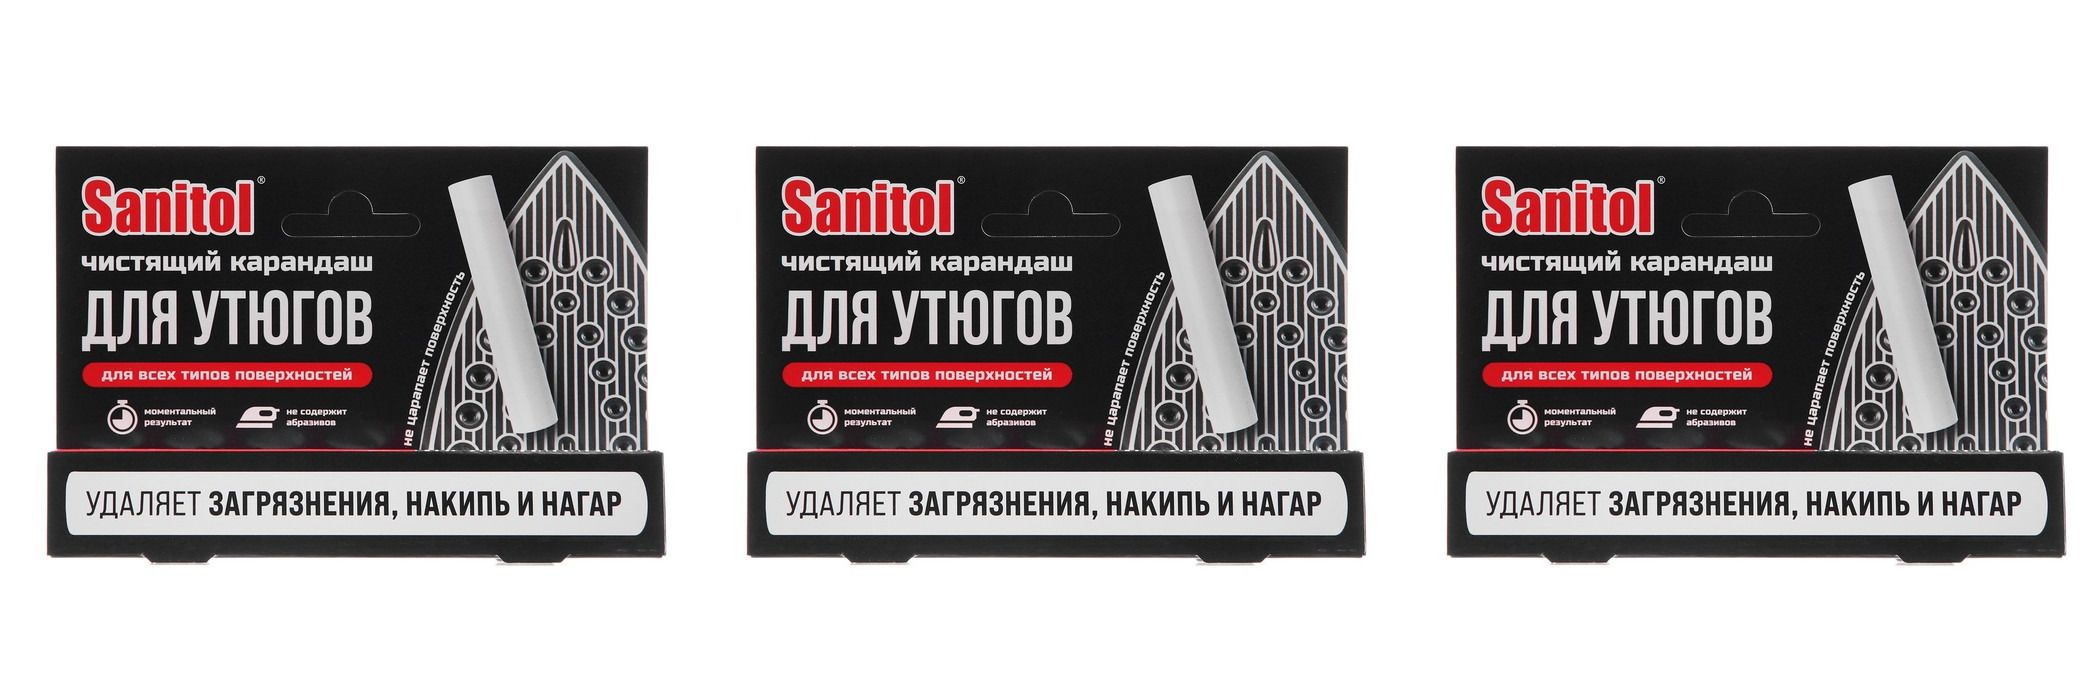 Чистящий карандаш для утюгов Sanitol 3шт чистящий карандаш для утюгов sanitol 3шт